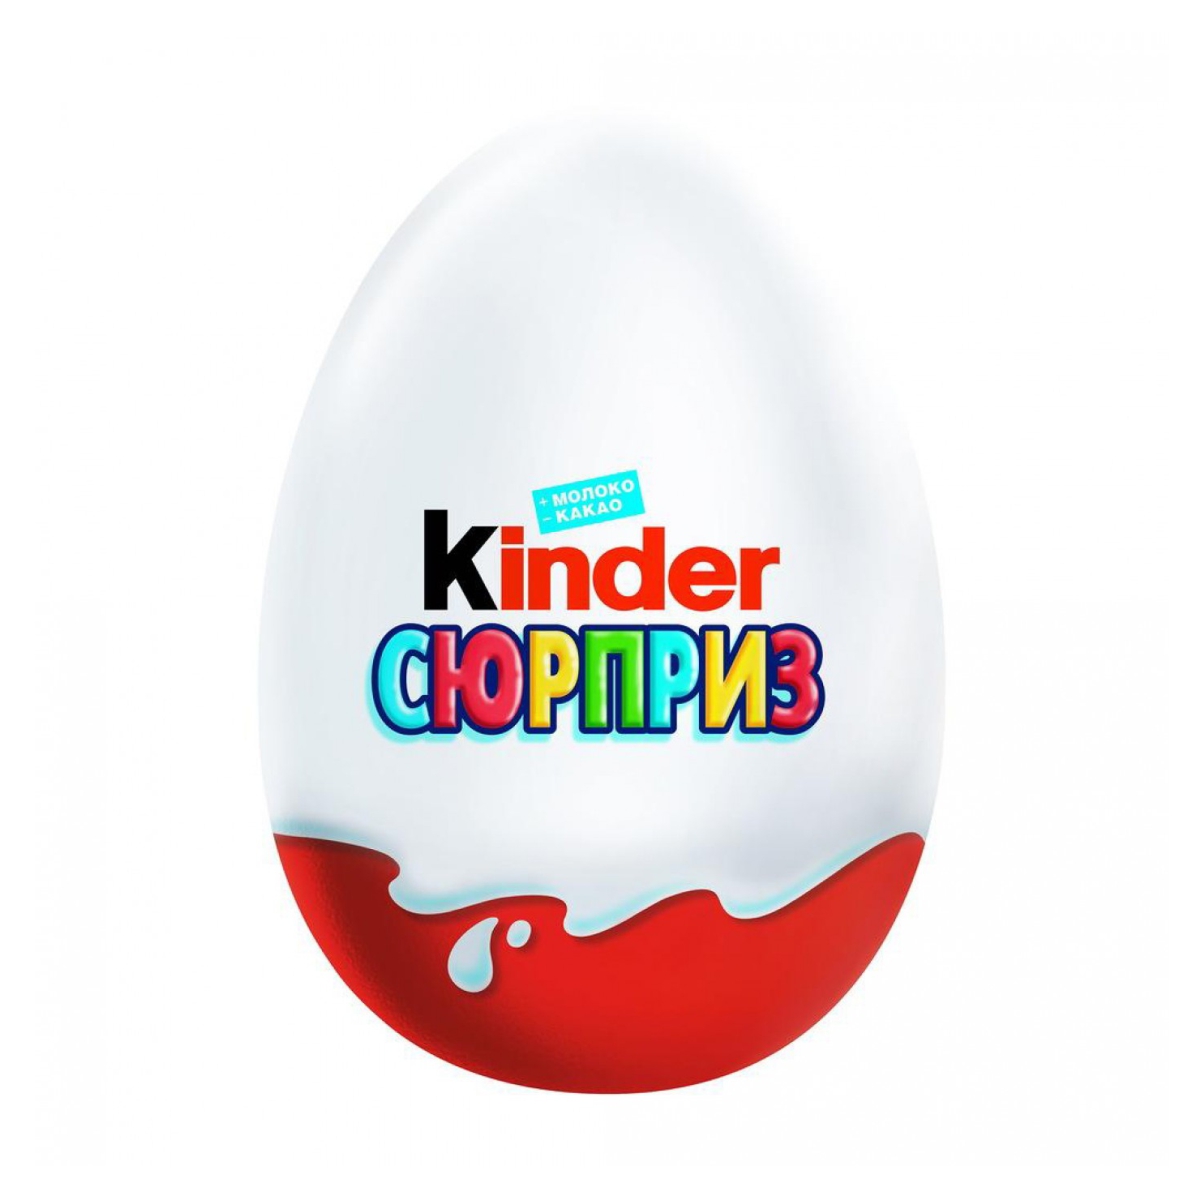 Киндер сюрприз 0. Шоколадное яйцо kinder "Киндер-сюрприз", 20 г. Киндер сюрприз яйцо шлколад. Яйцо ШОК. Киндер сюрприз 20г.